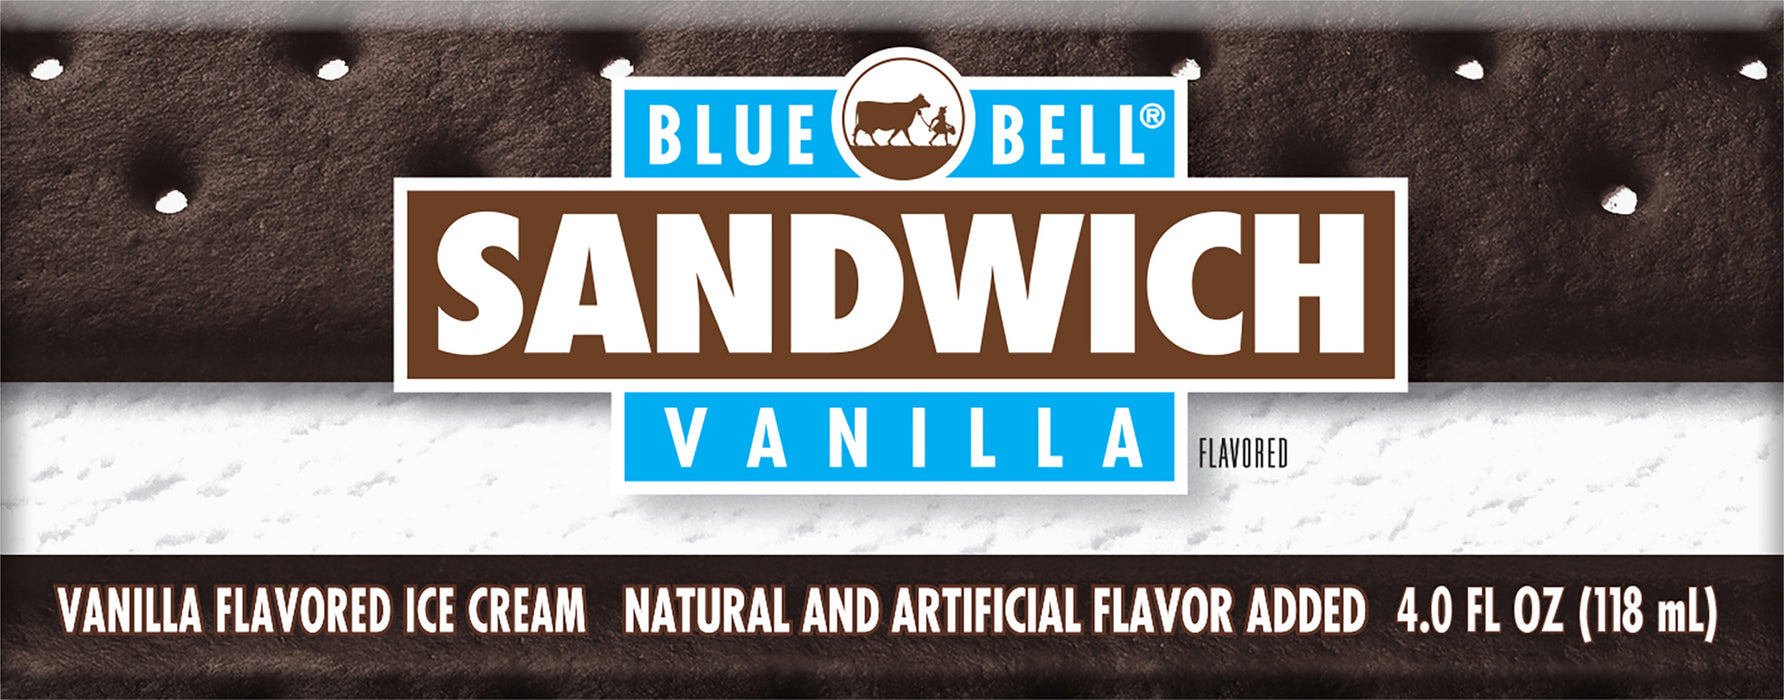 Blue Bell - Vanilla Sandwich